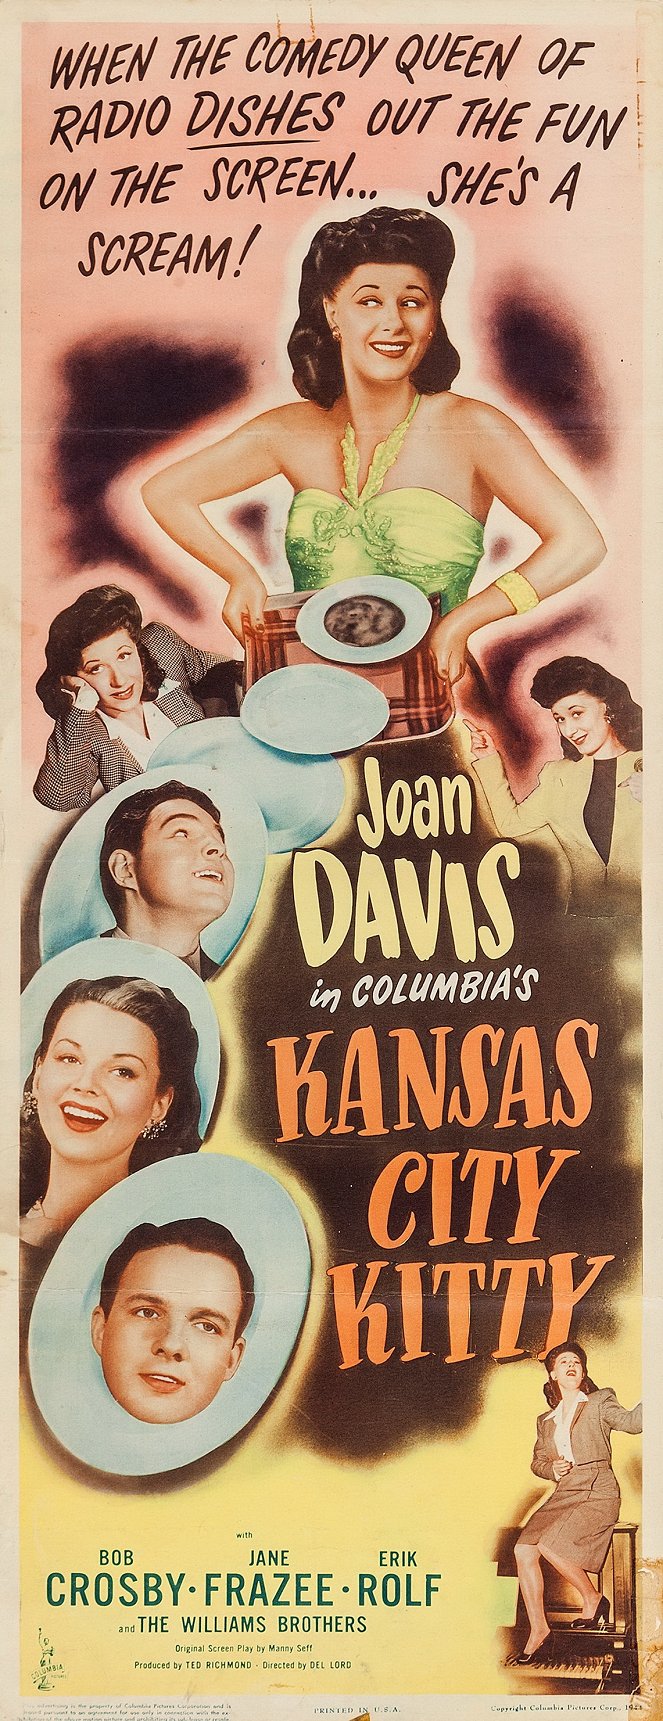 Kansas City Kitty - Posters